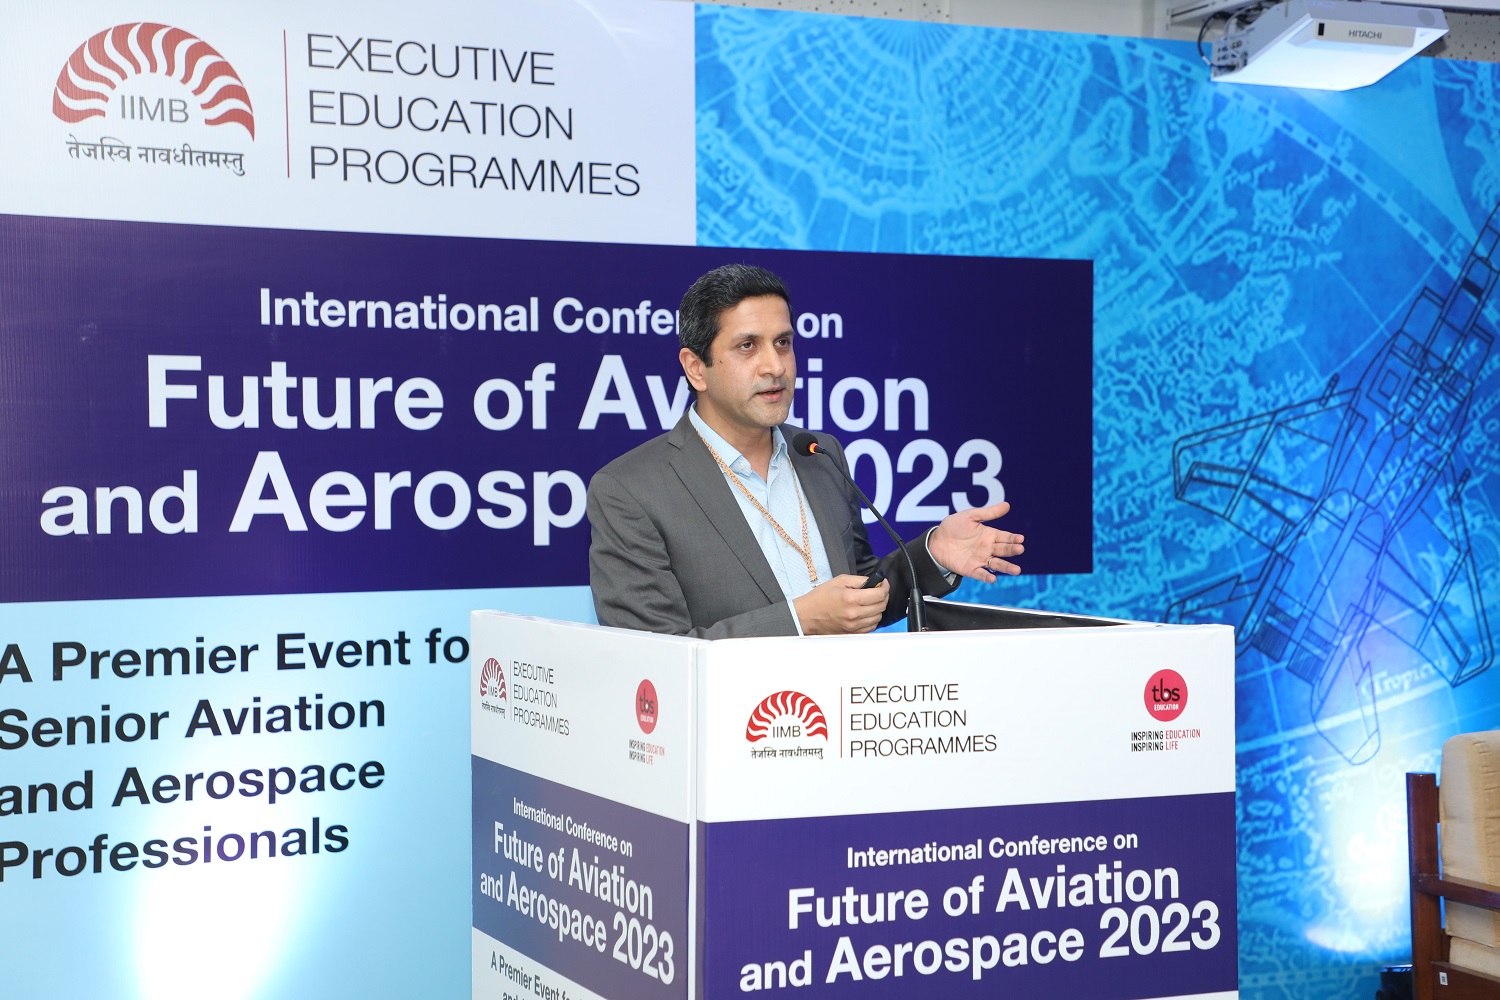 Mr. Savyasachi Srinivas, Executive Director, Collins Aerospace, delivers the inaugural address at the FOAA’23 conference.